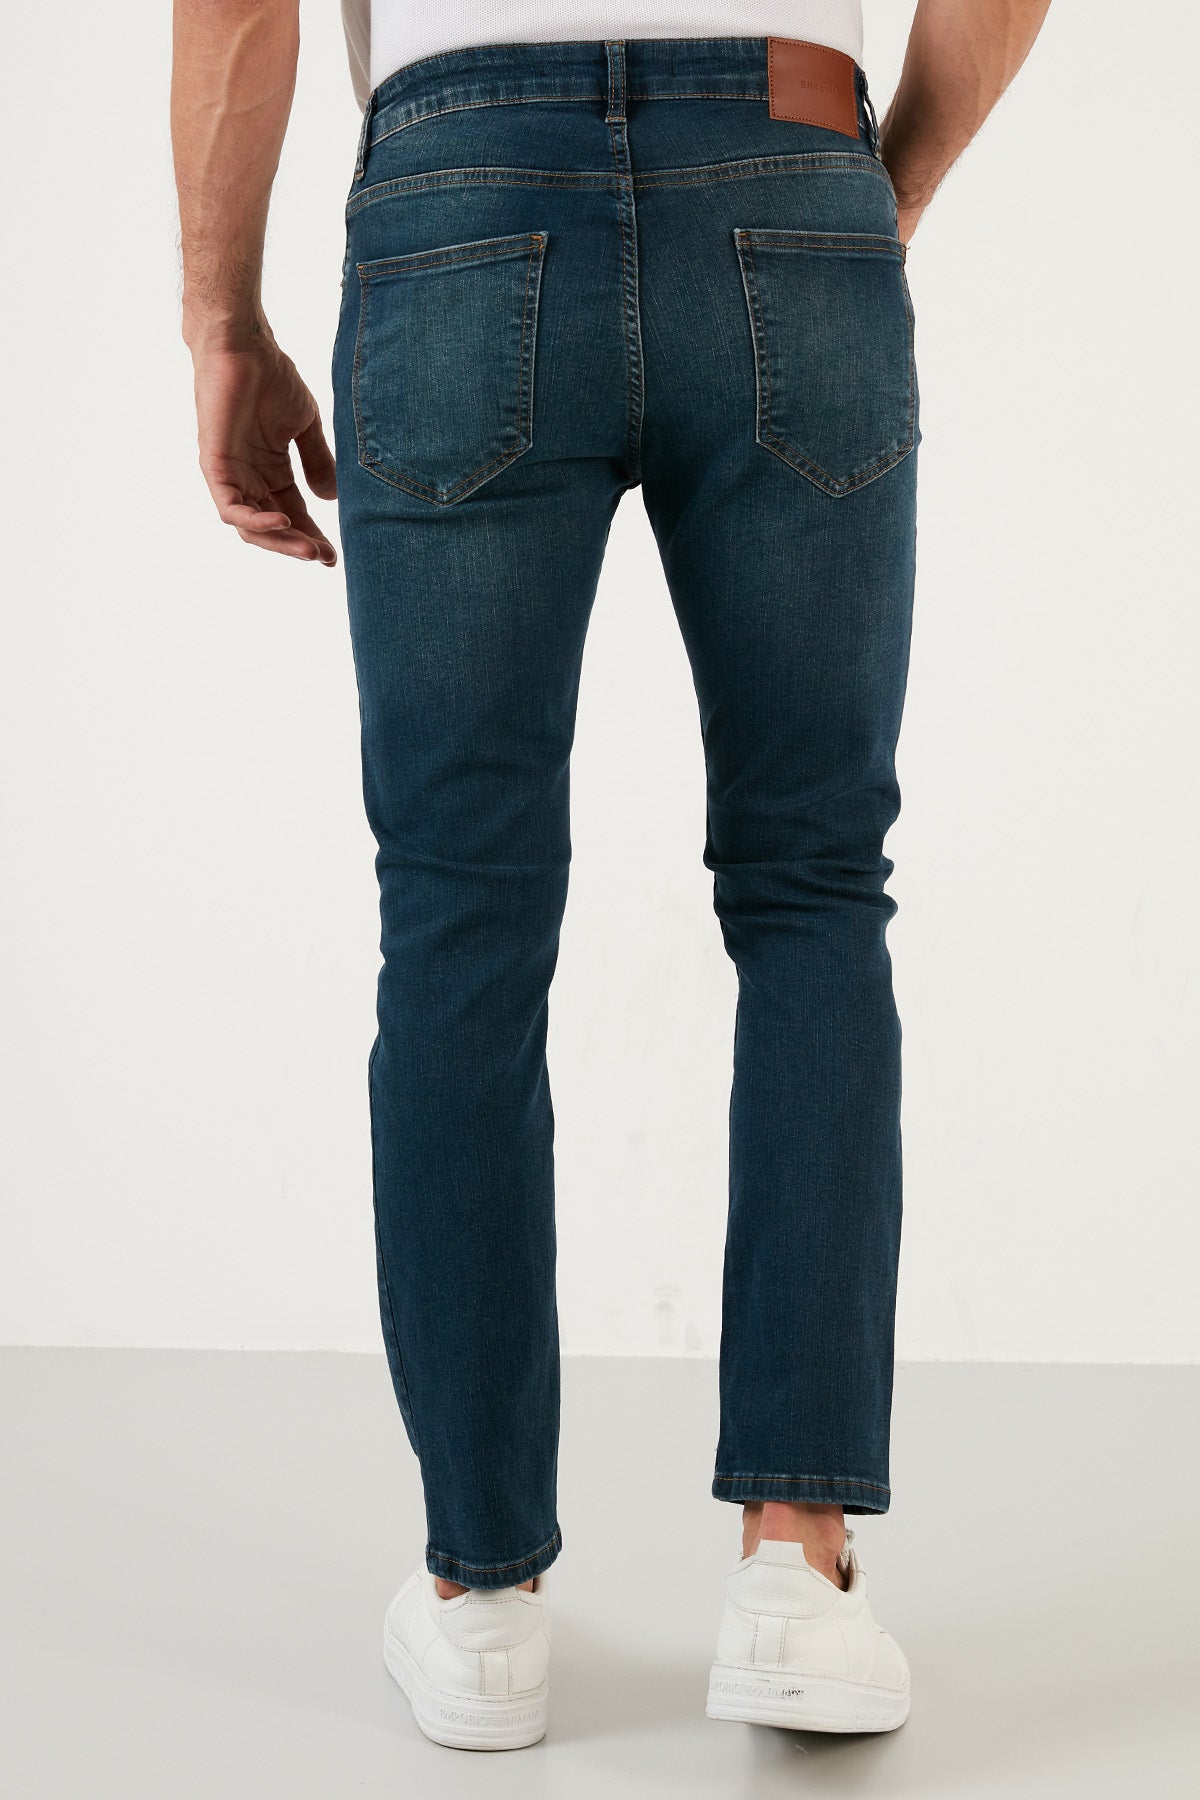 Buratti Pamuklu Normal Bel Slim Fit Boru Paça Jeans Erkek Kot Pantolon 2000G117PARMA MAVİ